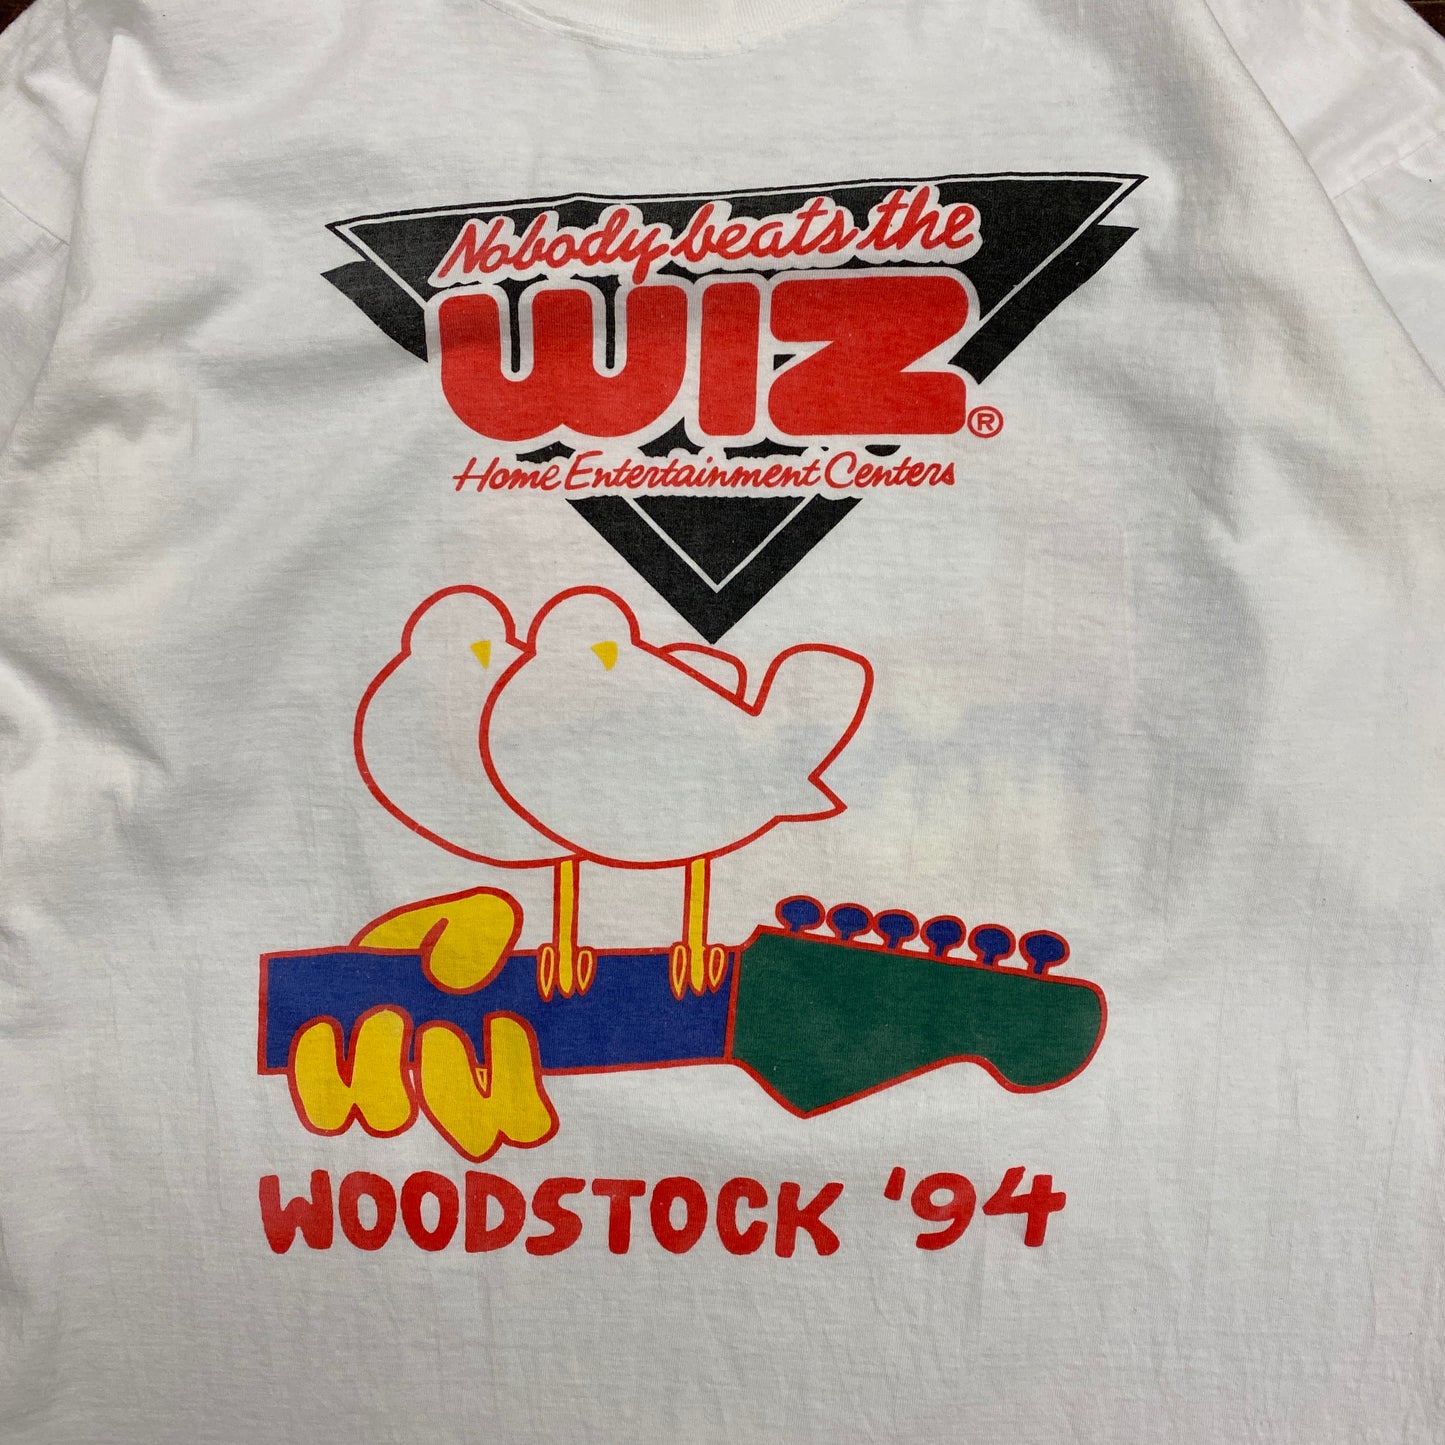 Vintage Woodstock '94 Official Sponsor Tee - Size Large